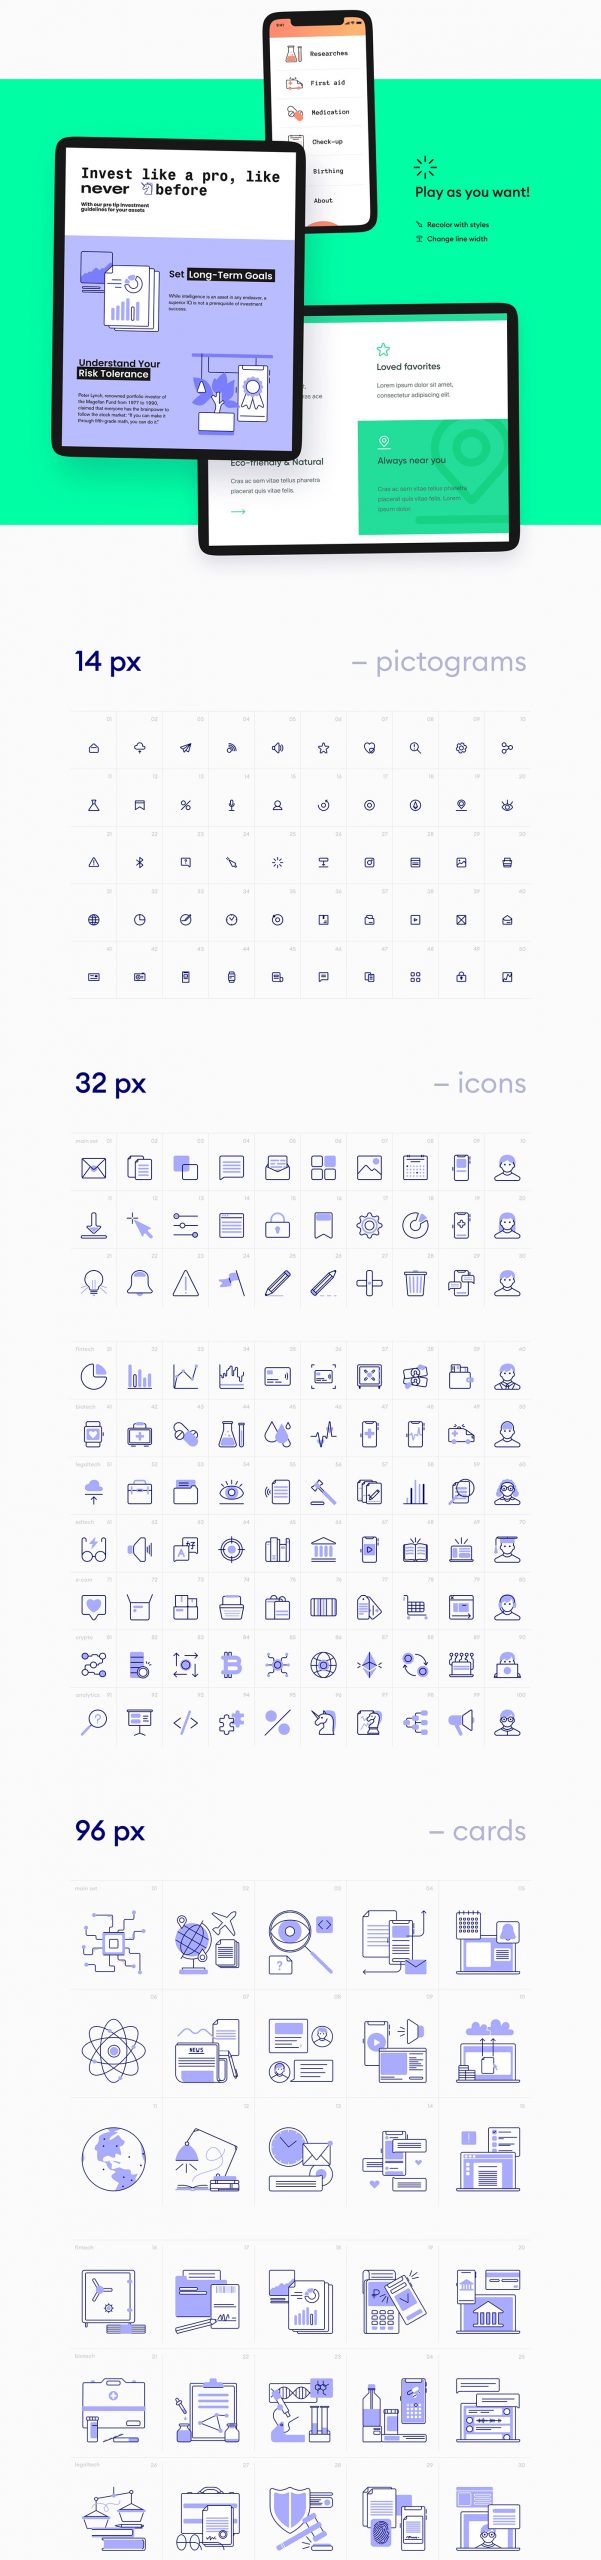 Figma free icons set